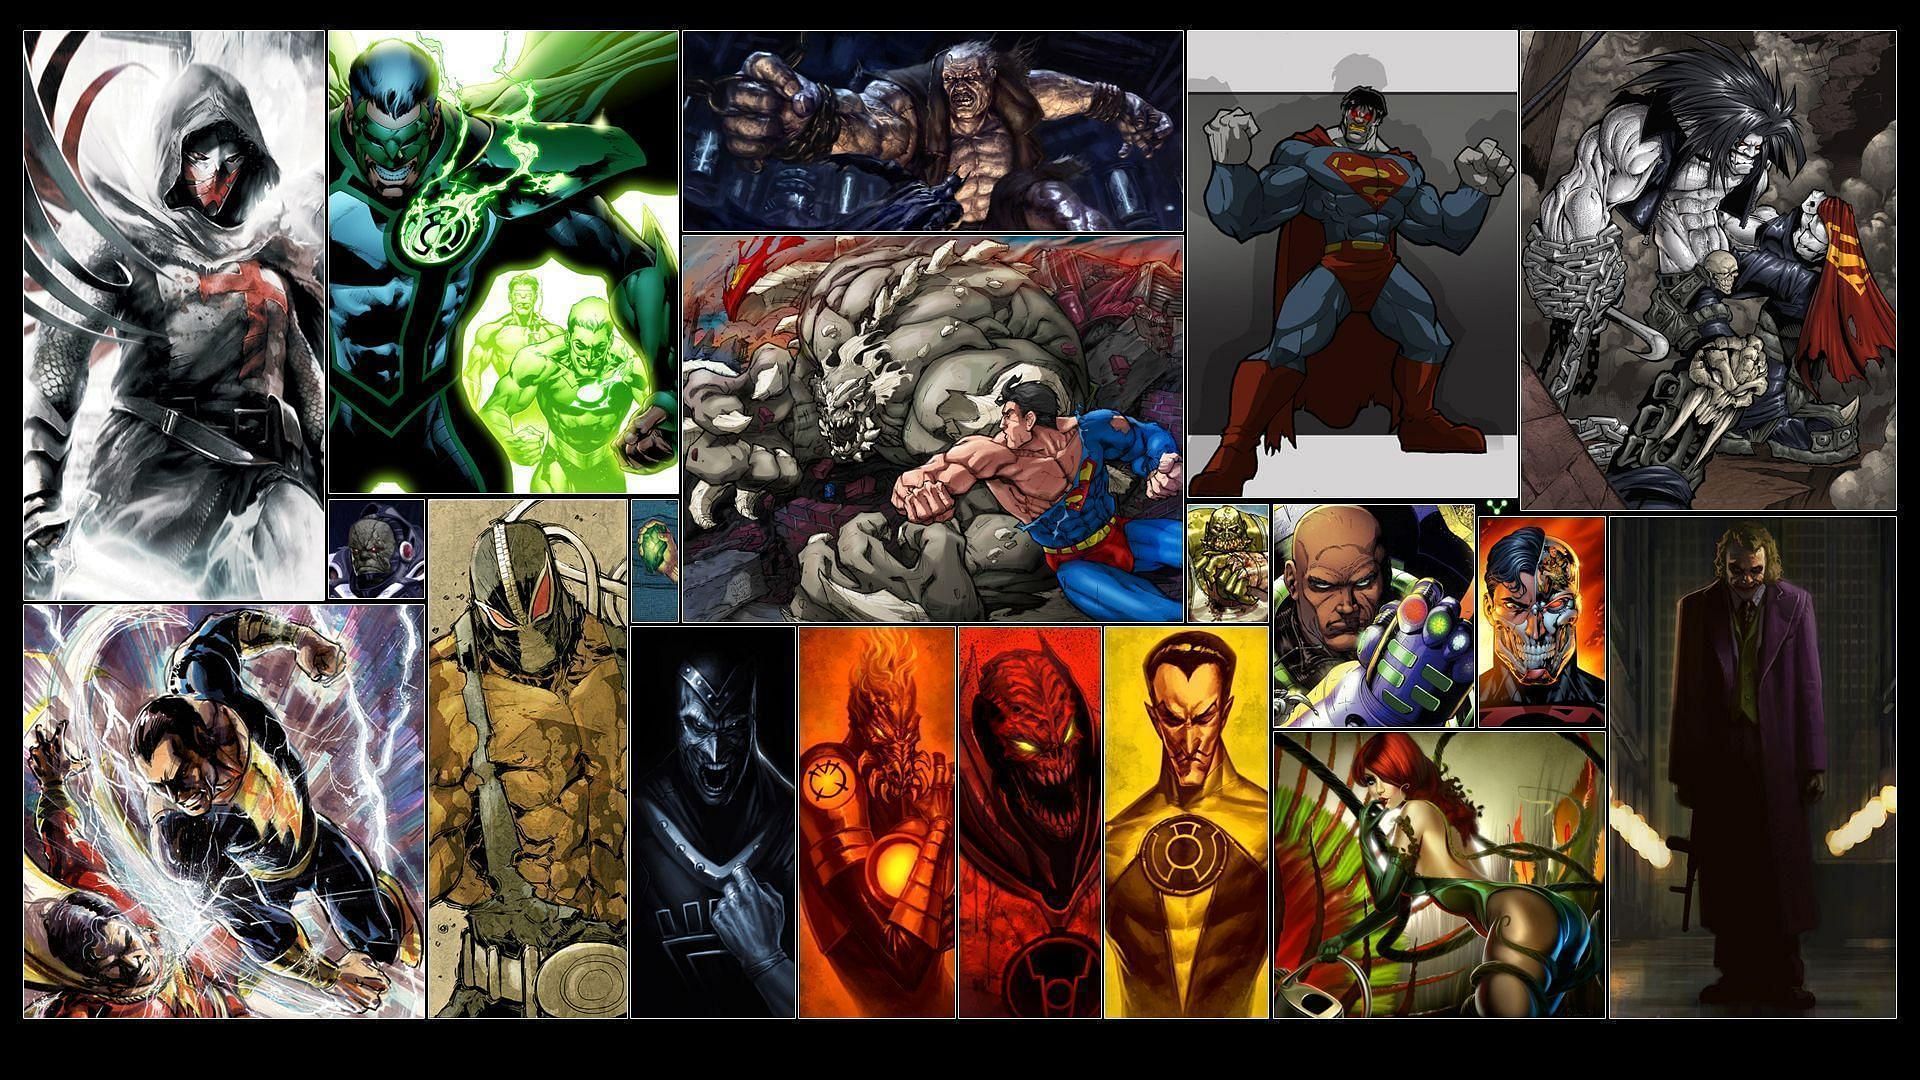 Superman has variety of villains in DC Comics. (Image via DC)